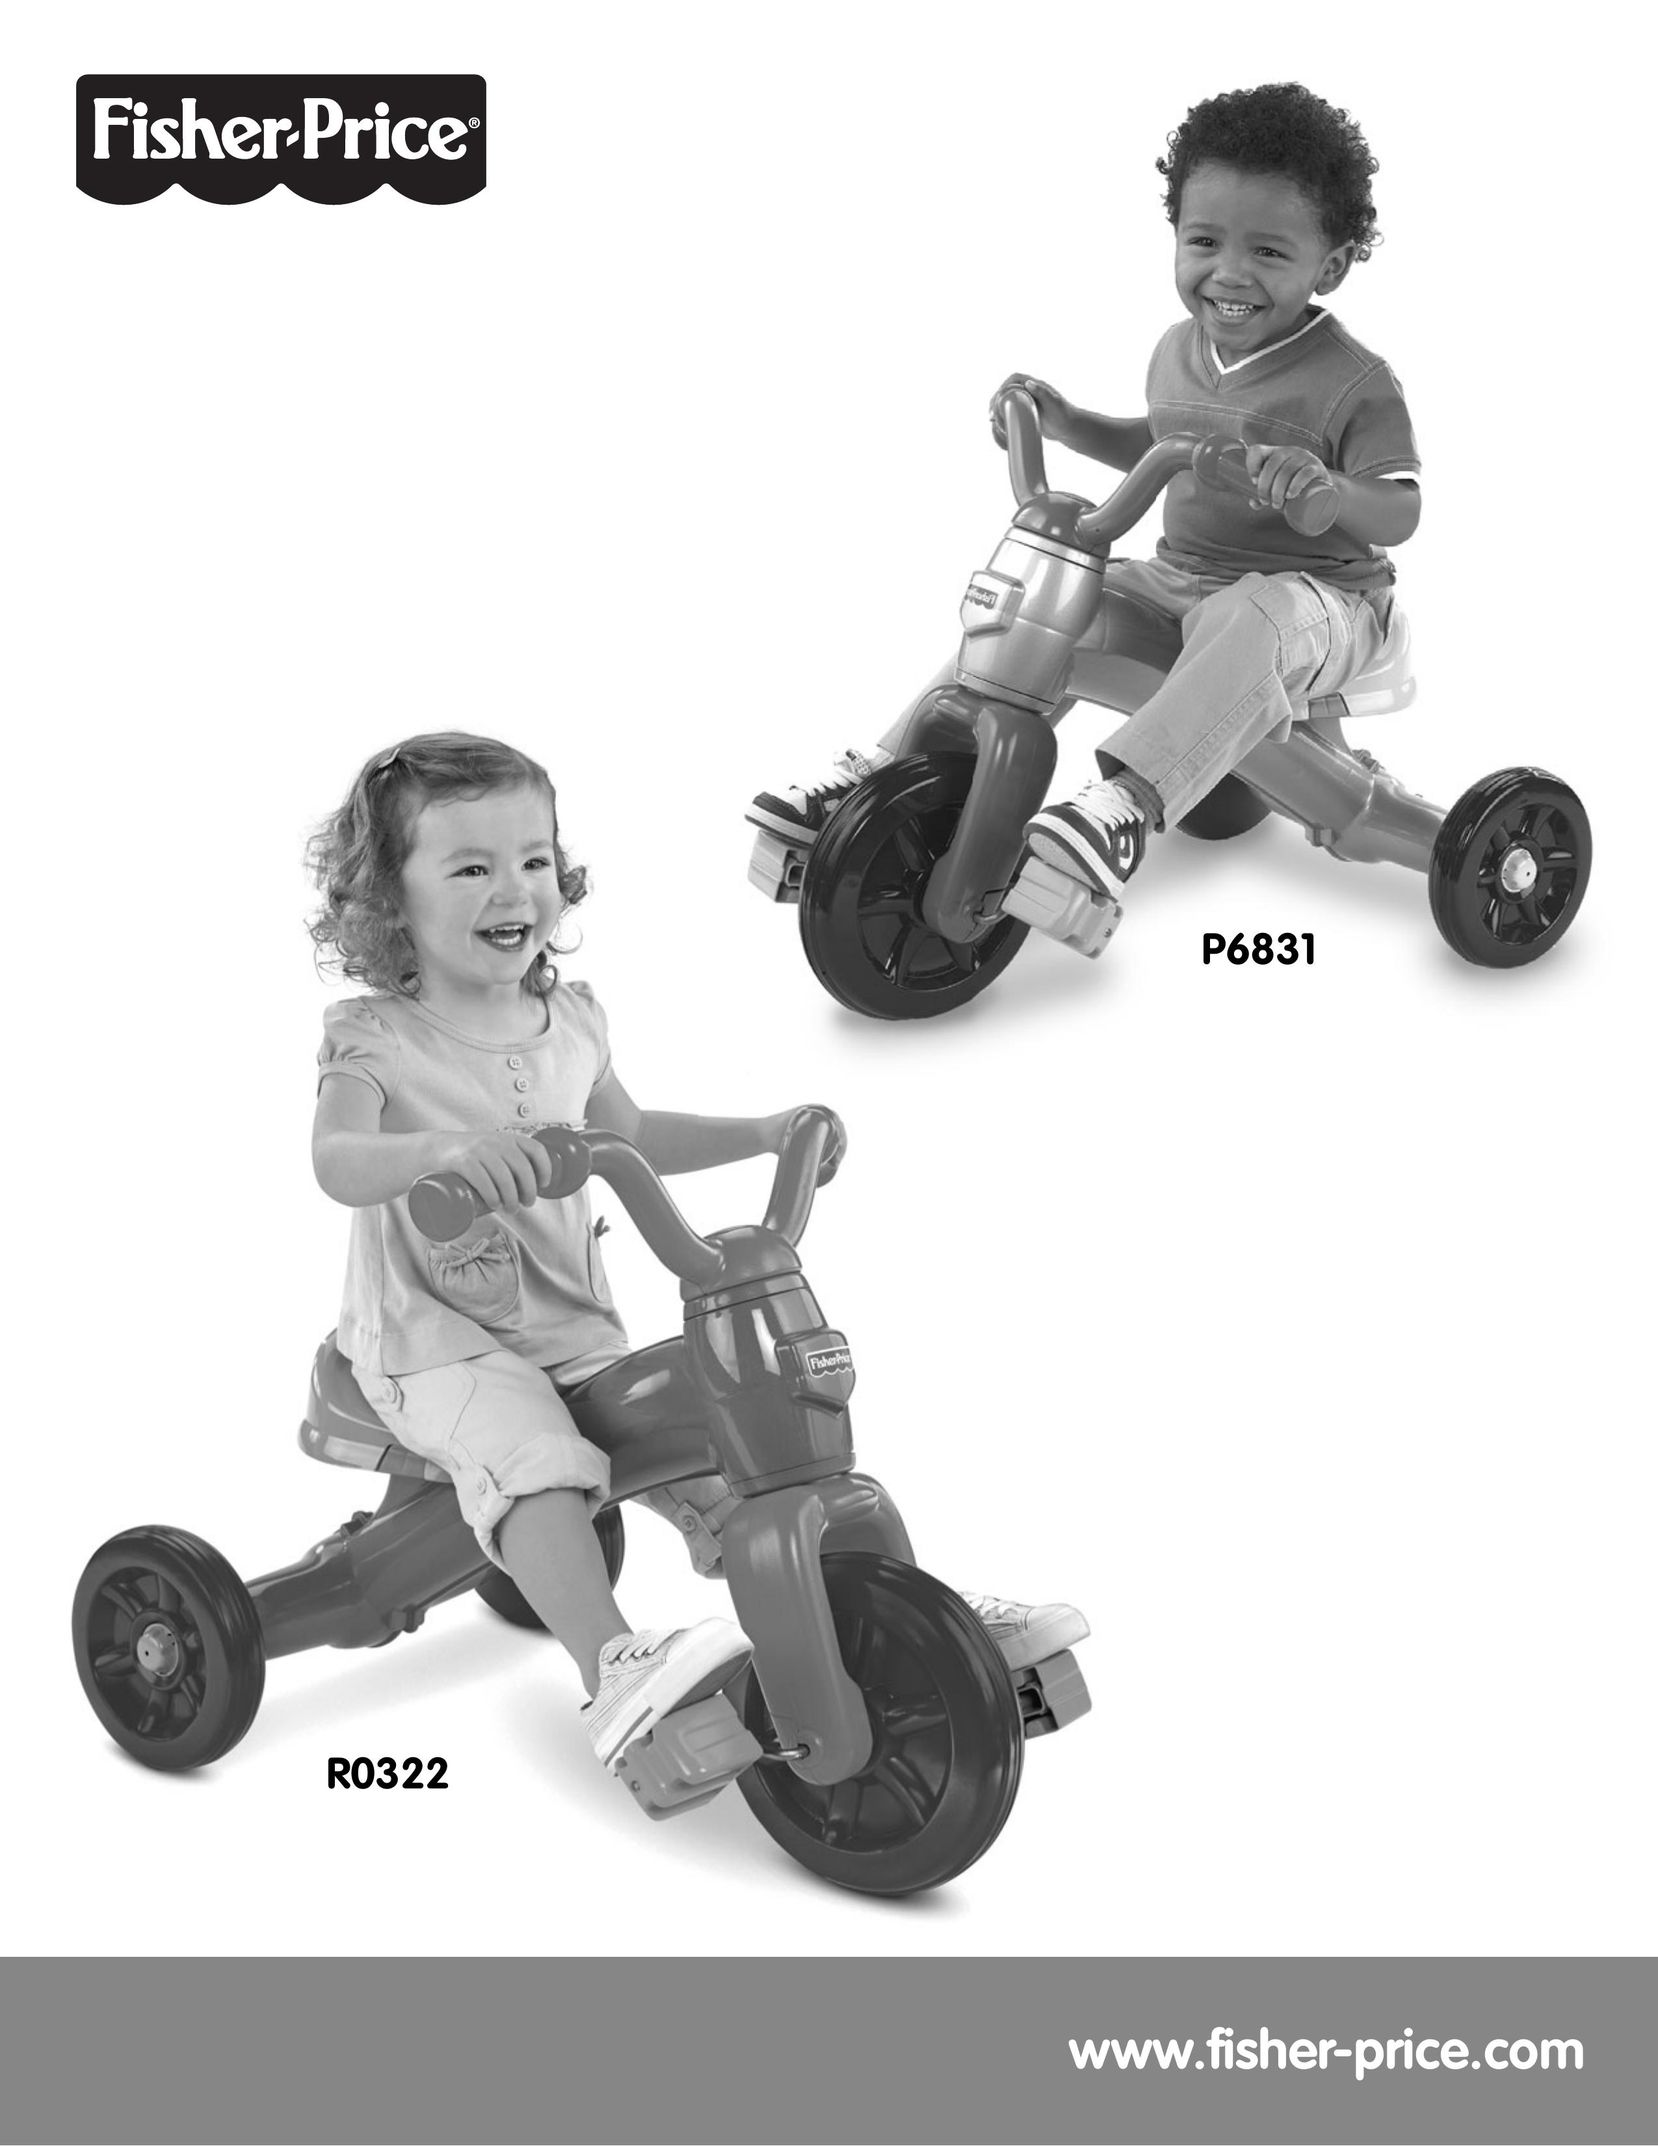 Fisher-Price P6831 Riding Toy User Manual